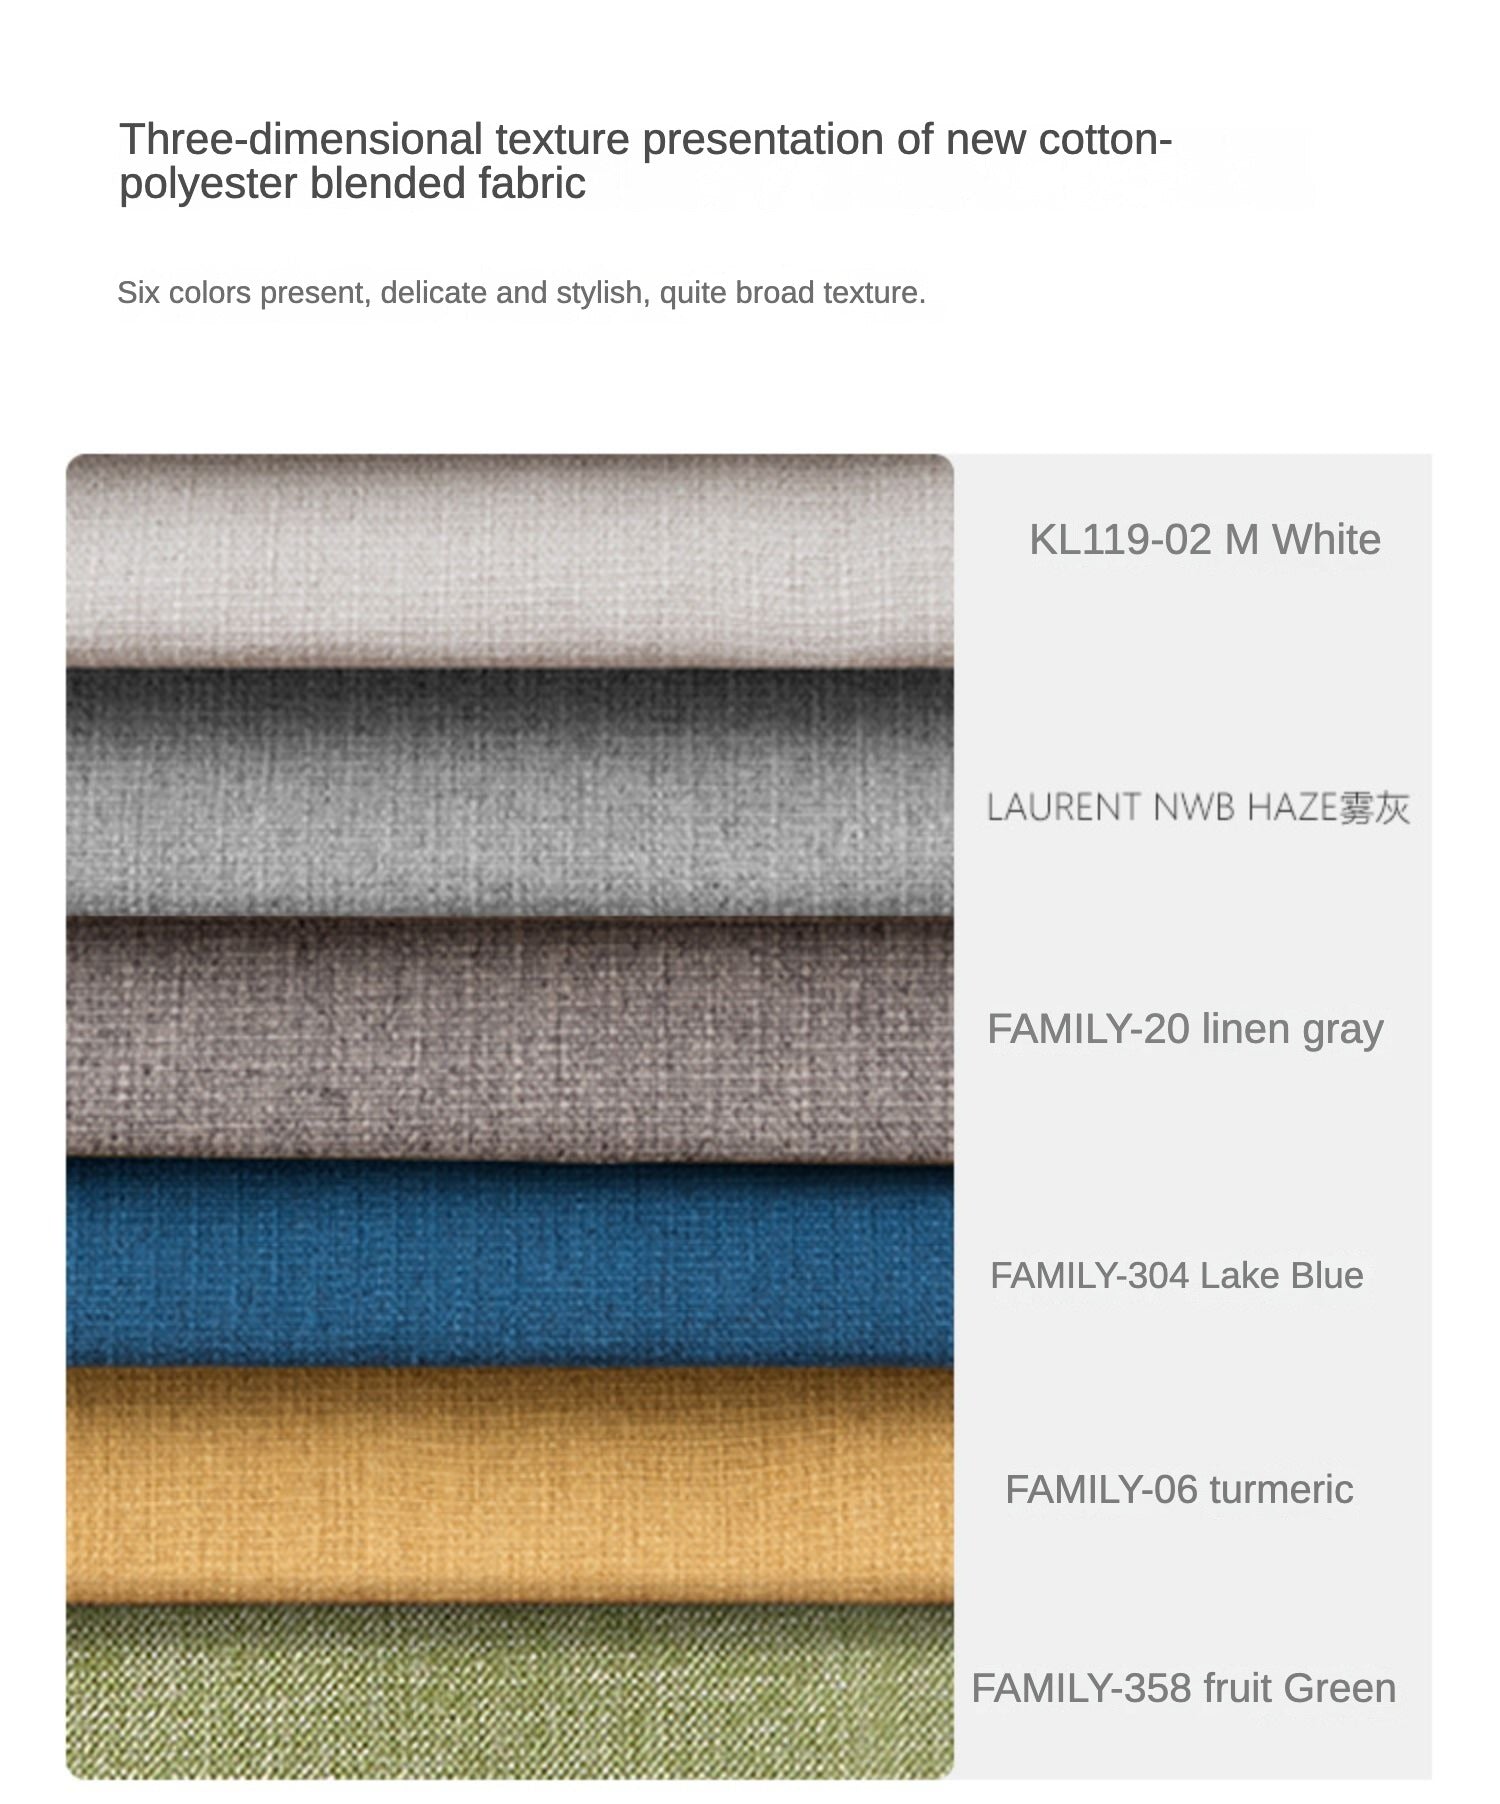 Sofa Oak solid wood fabric cushion -